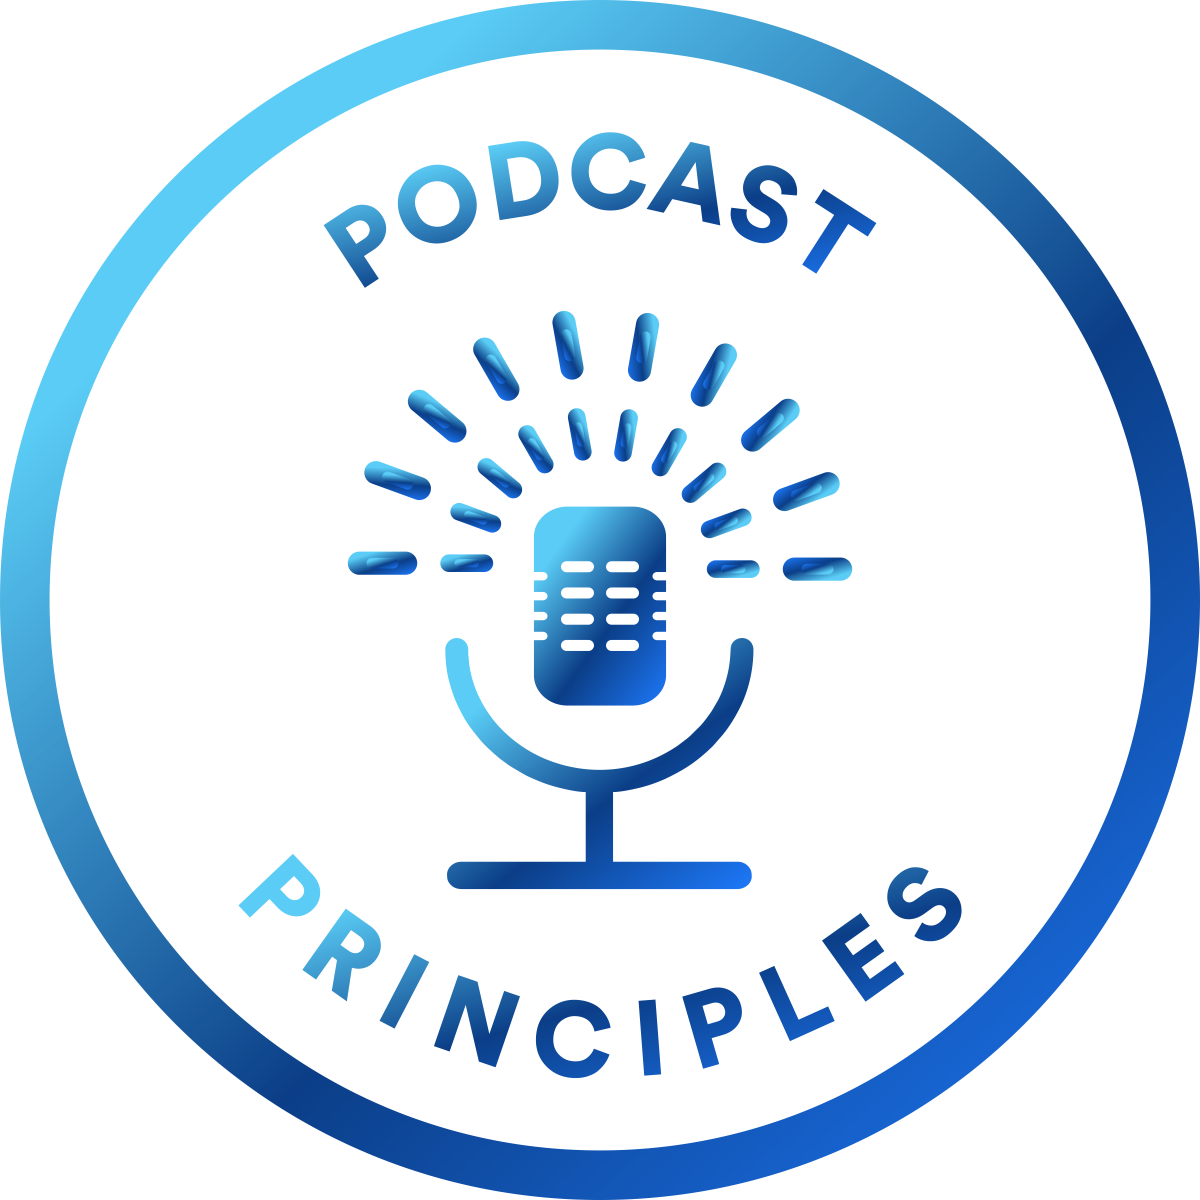 Podcast Principles